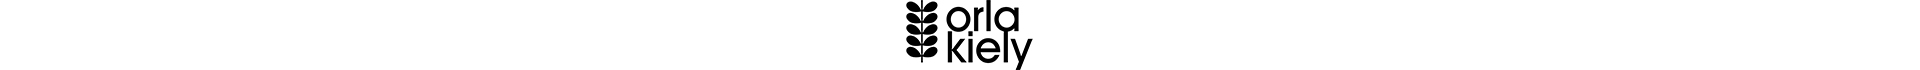 ORLA-KIELY-LOGO-1